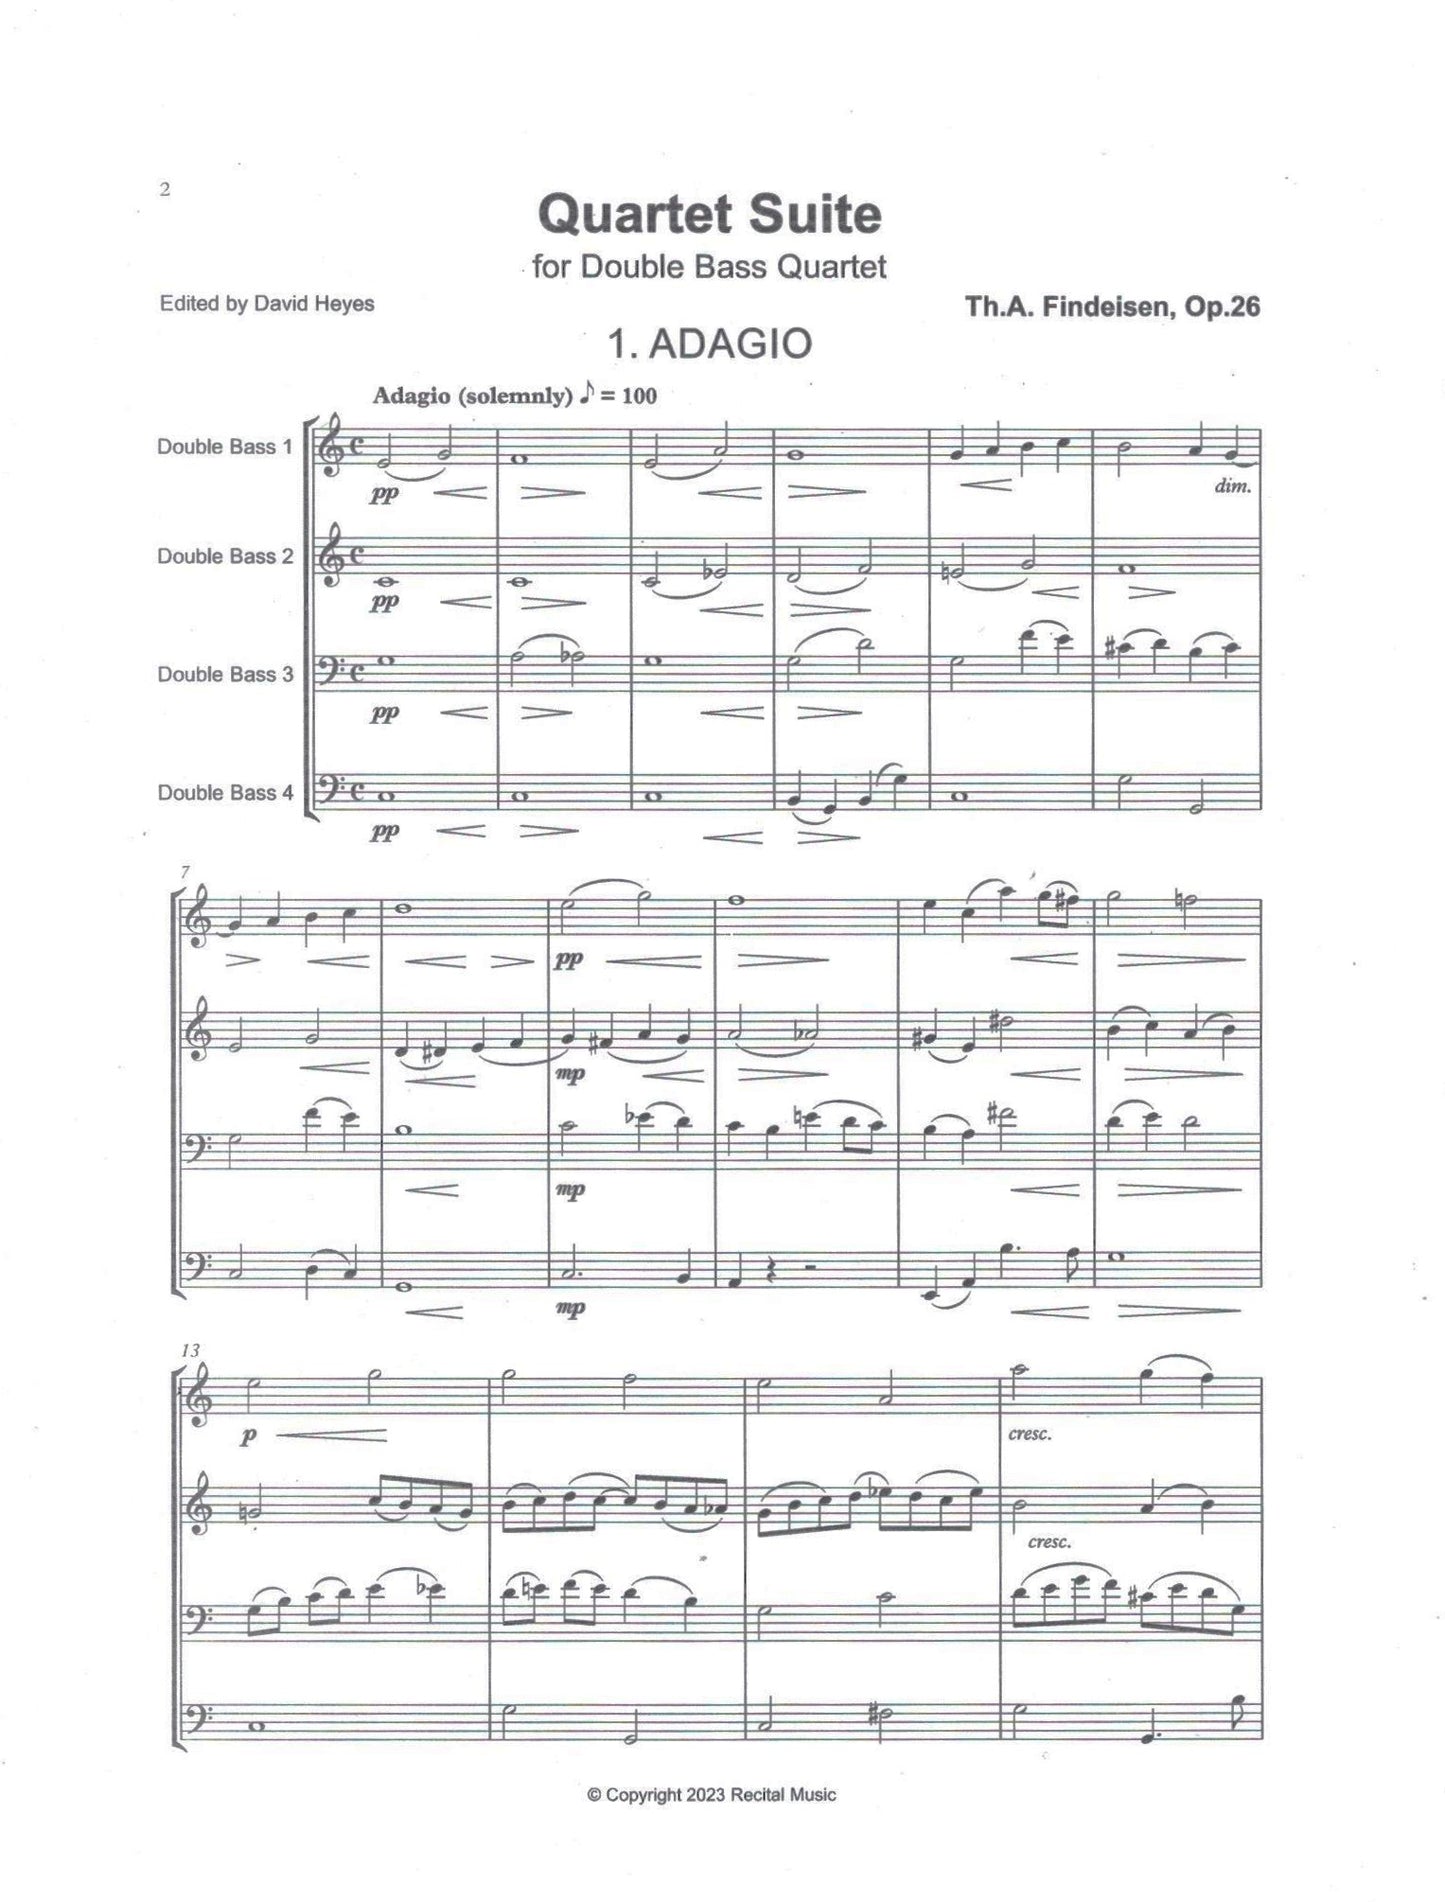 Th.A. Findeisen: Quartet Suite Op.26 for double bass quartet (ed. by David Heyes)